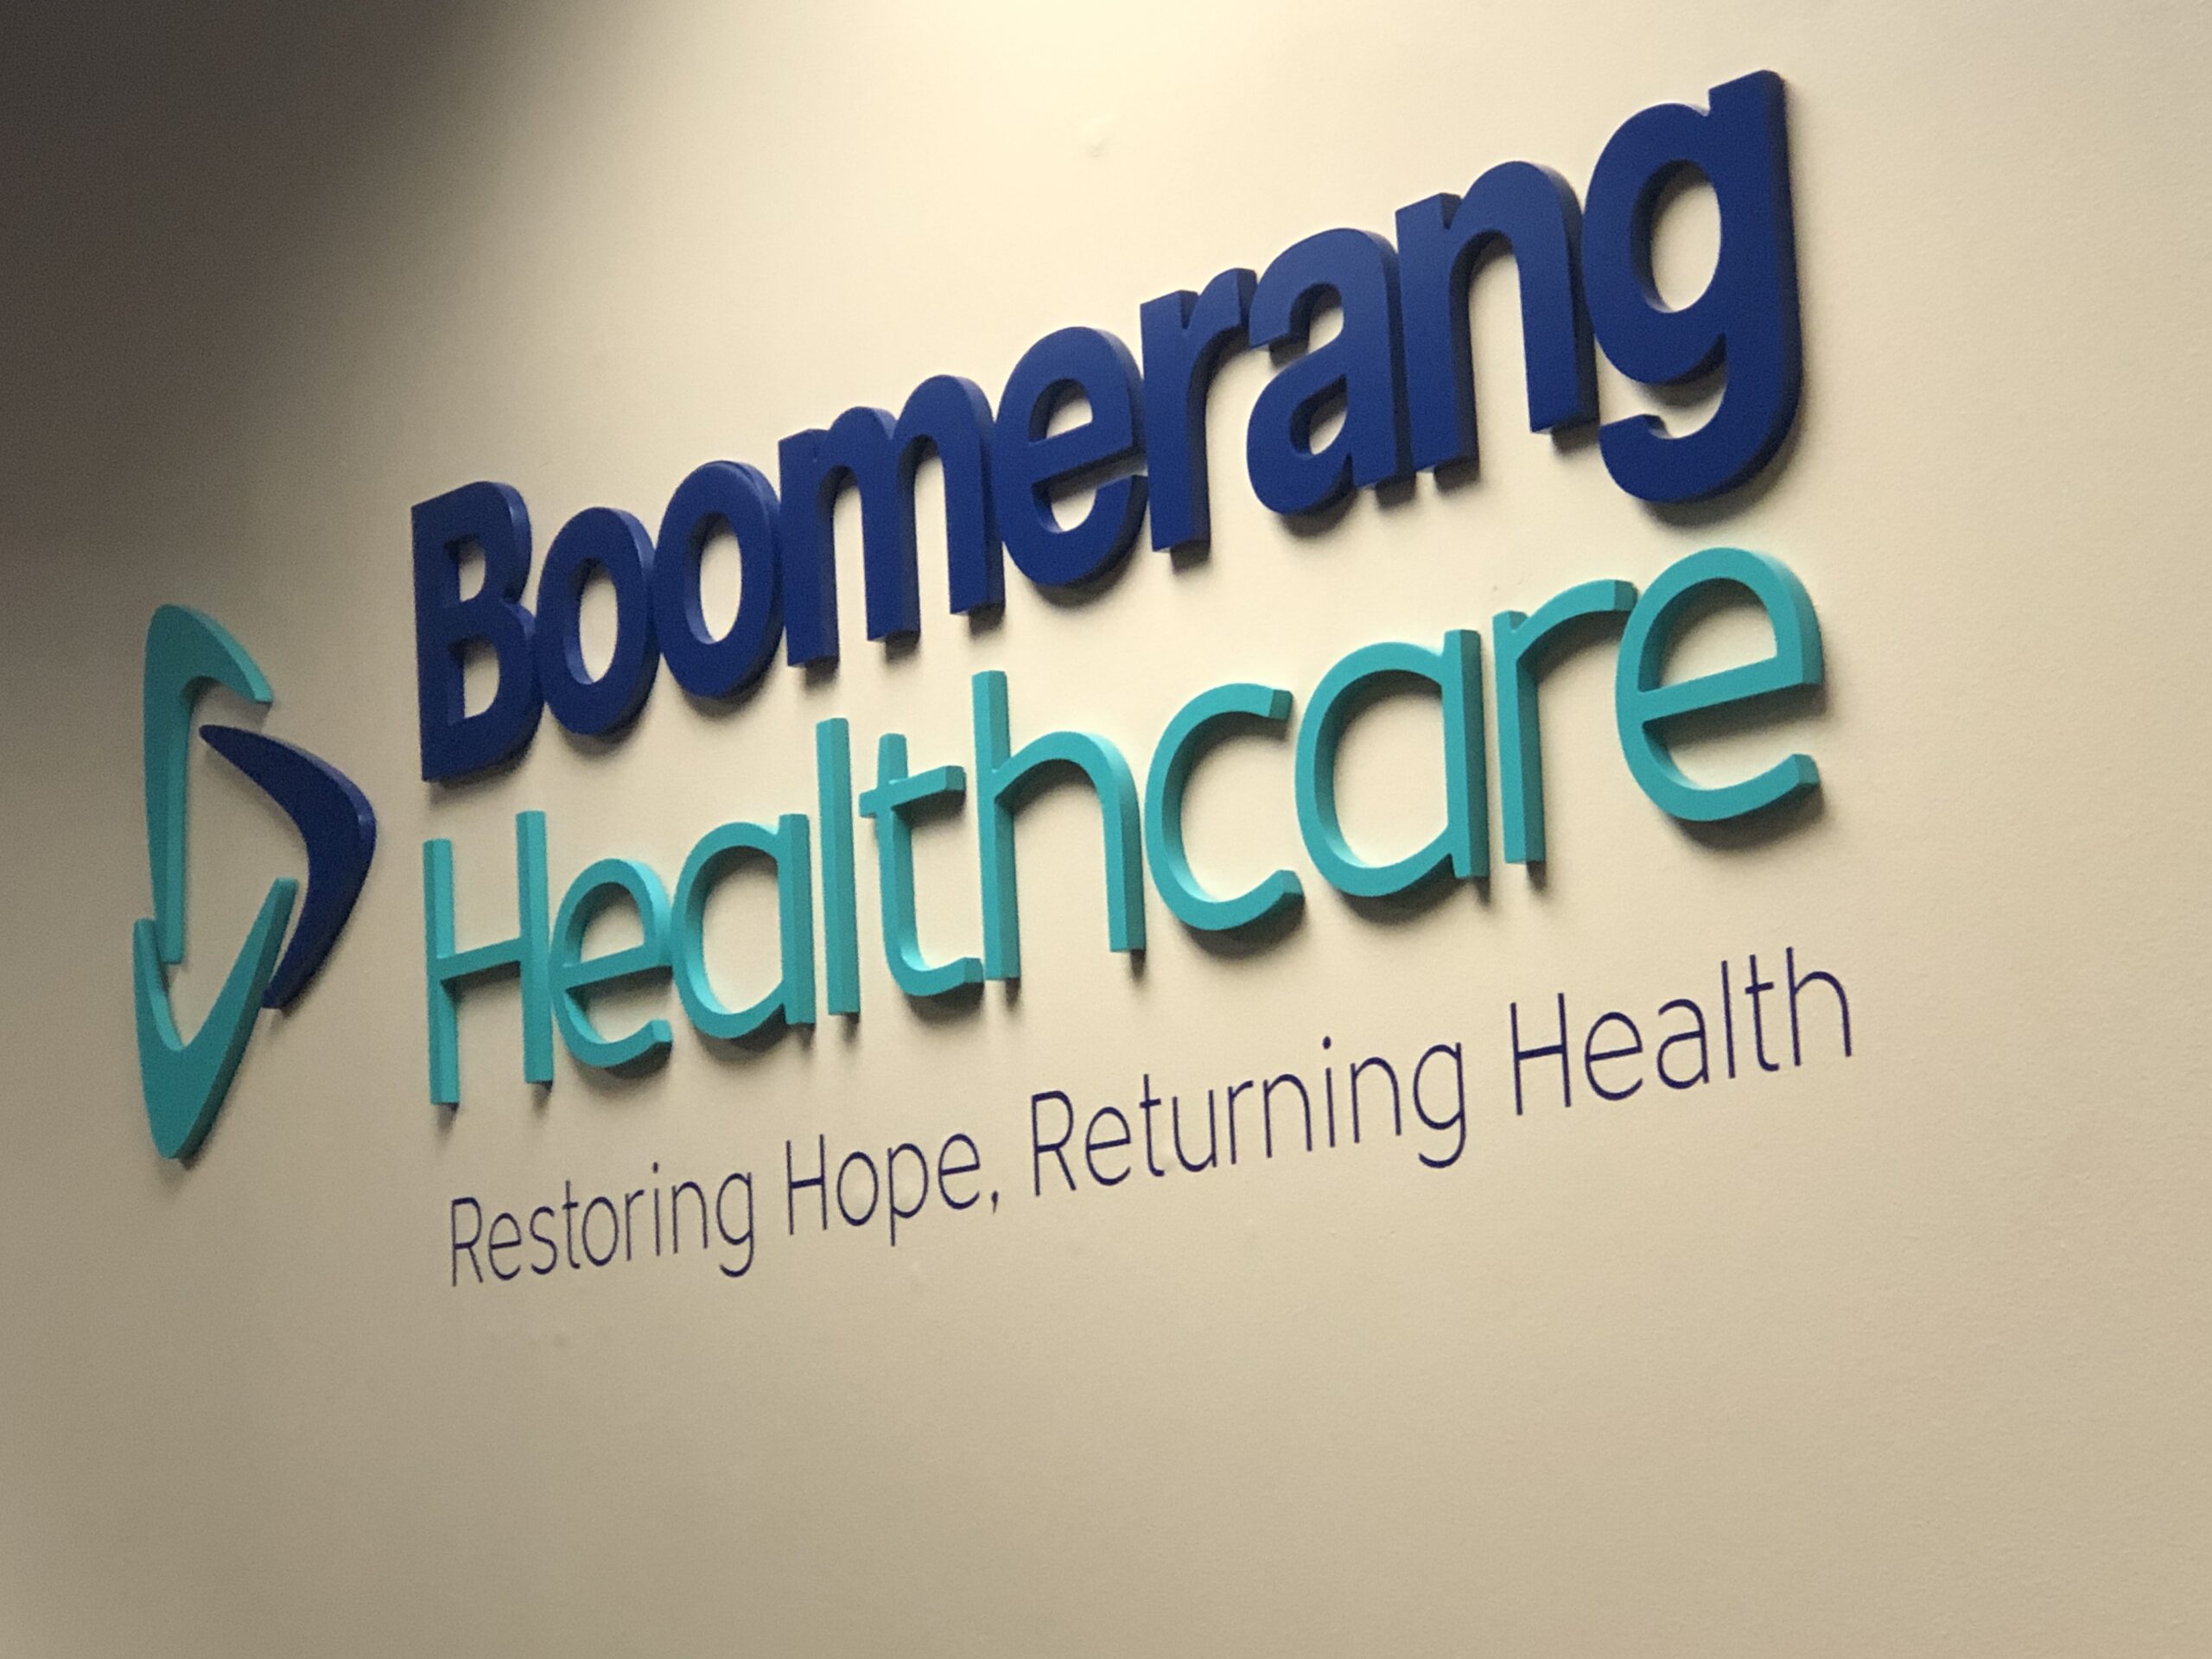 Boomerang Health image for inspiration